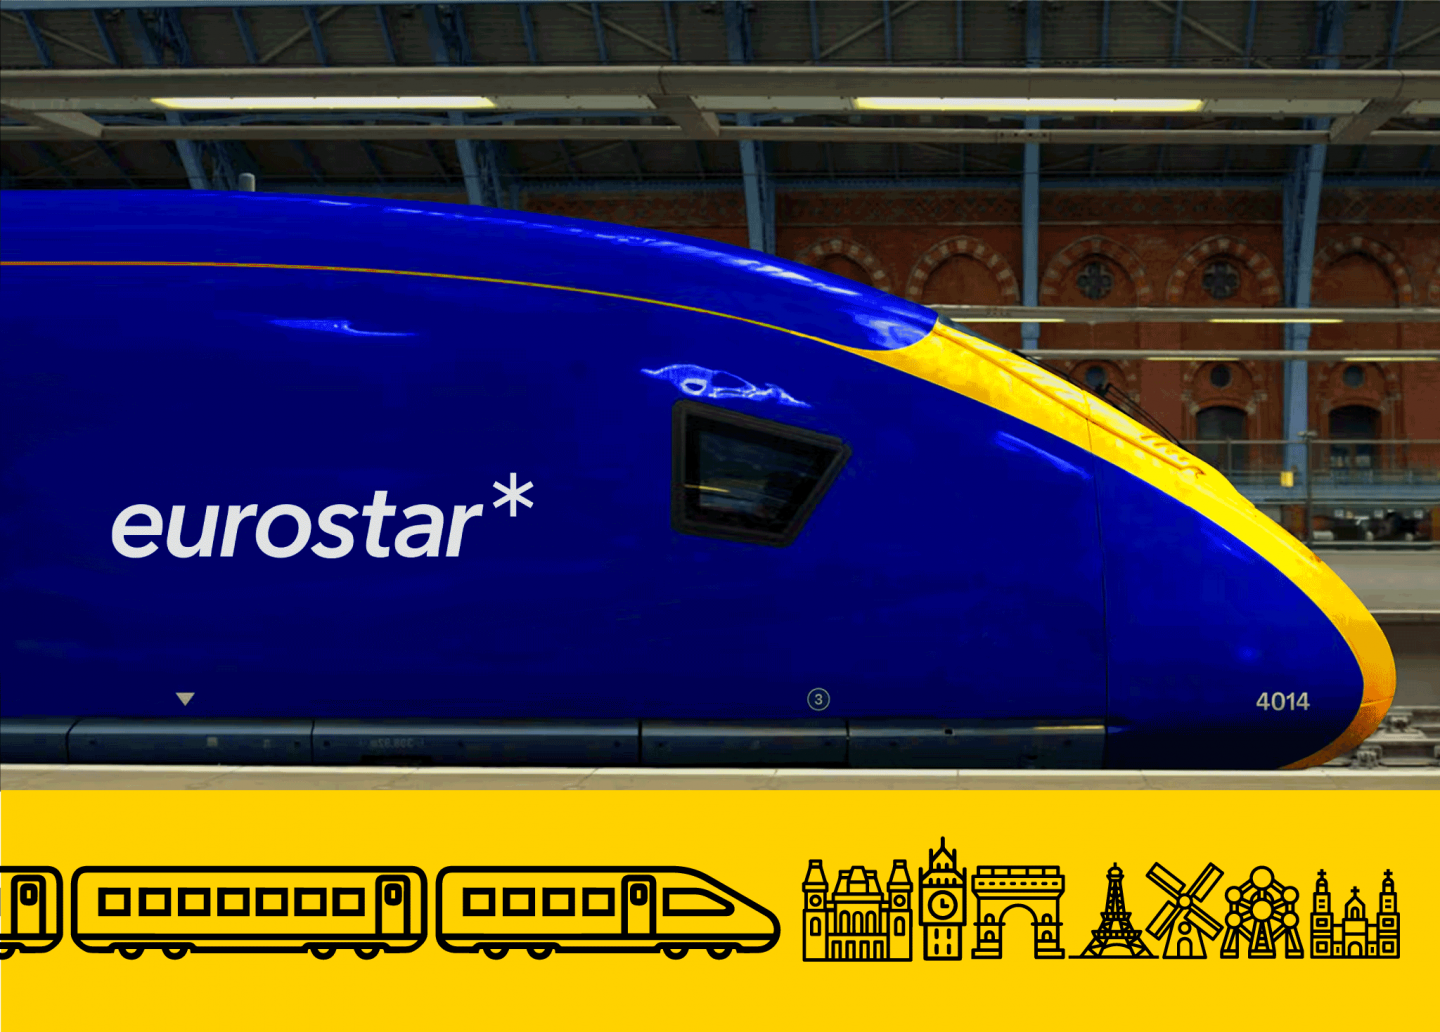 Eurostar - Transportation Brand